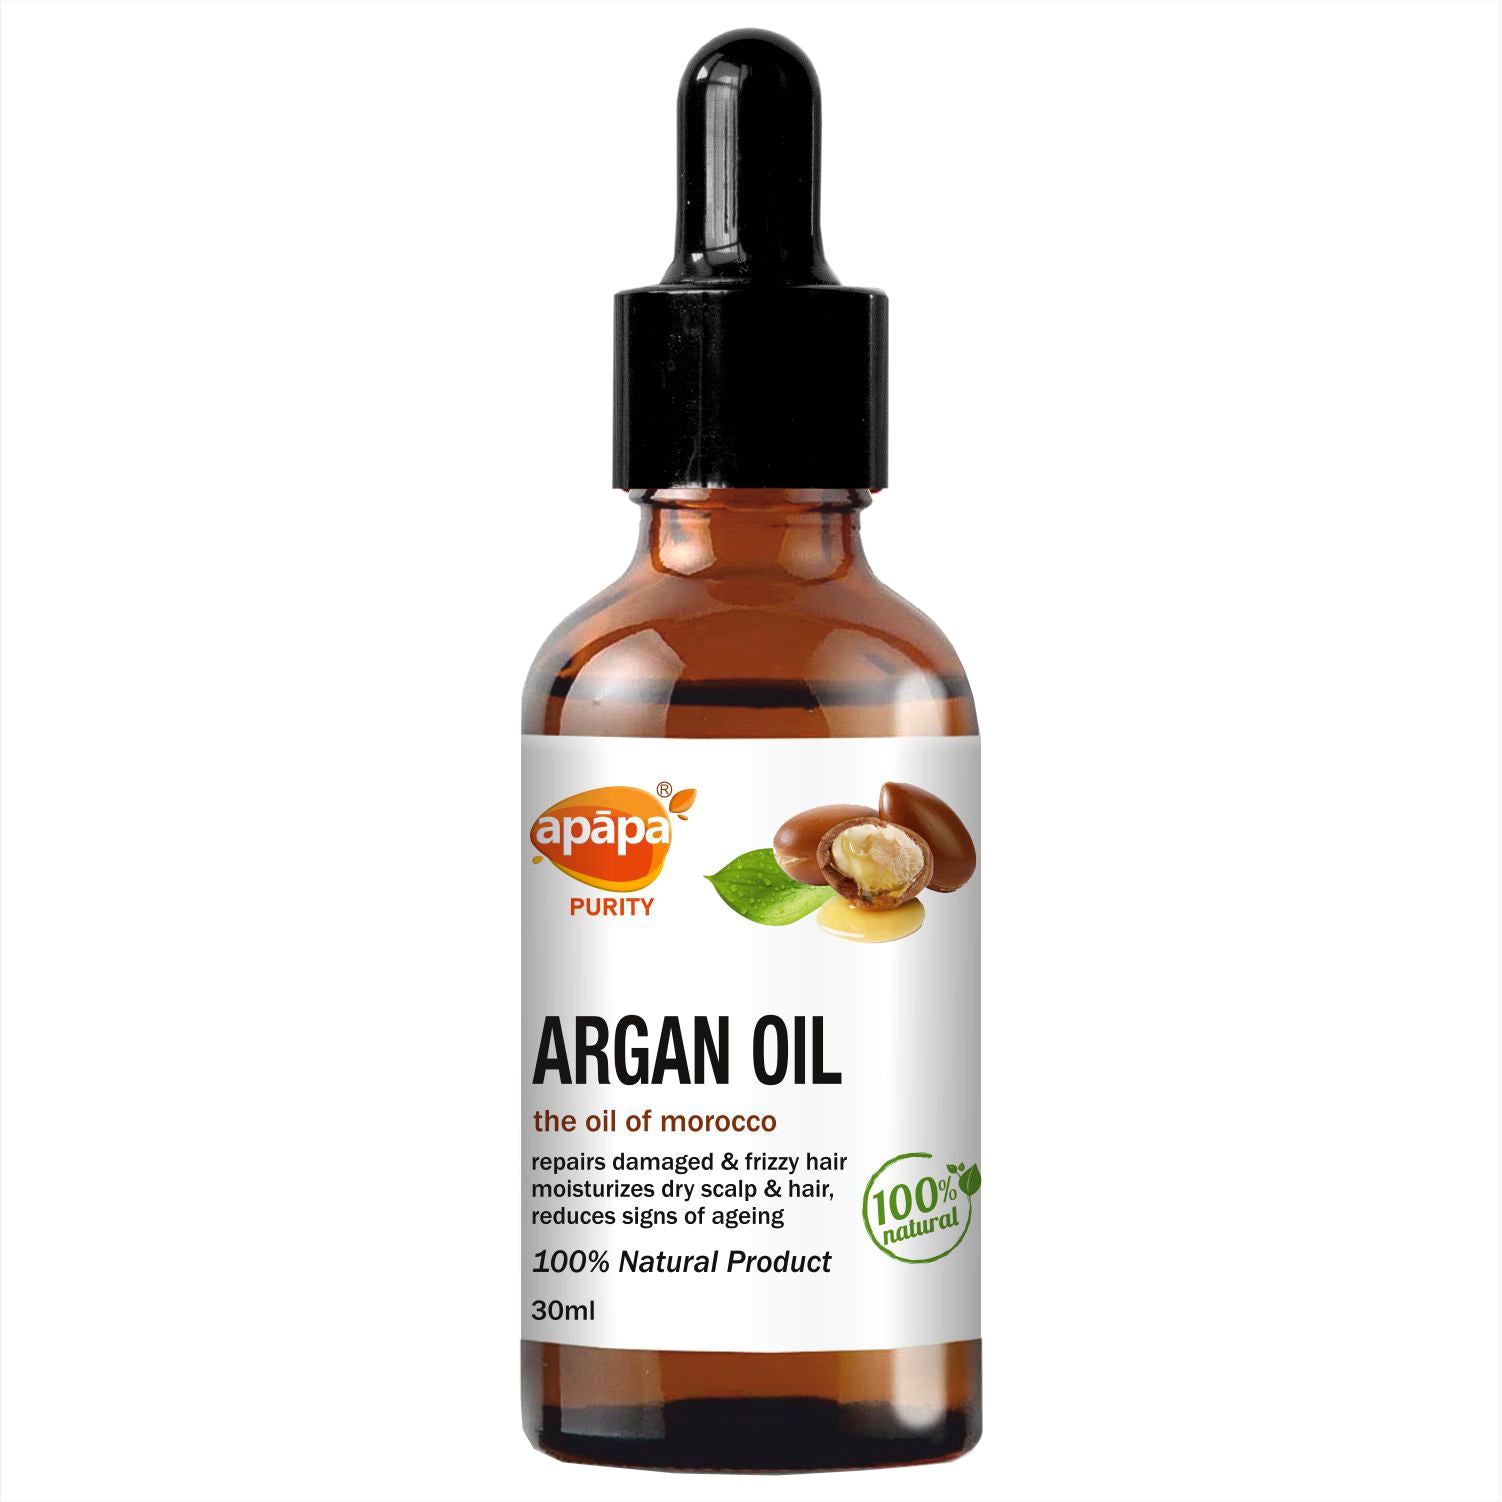 APĀPA Nourishing Moroccan Argan Oil